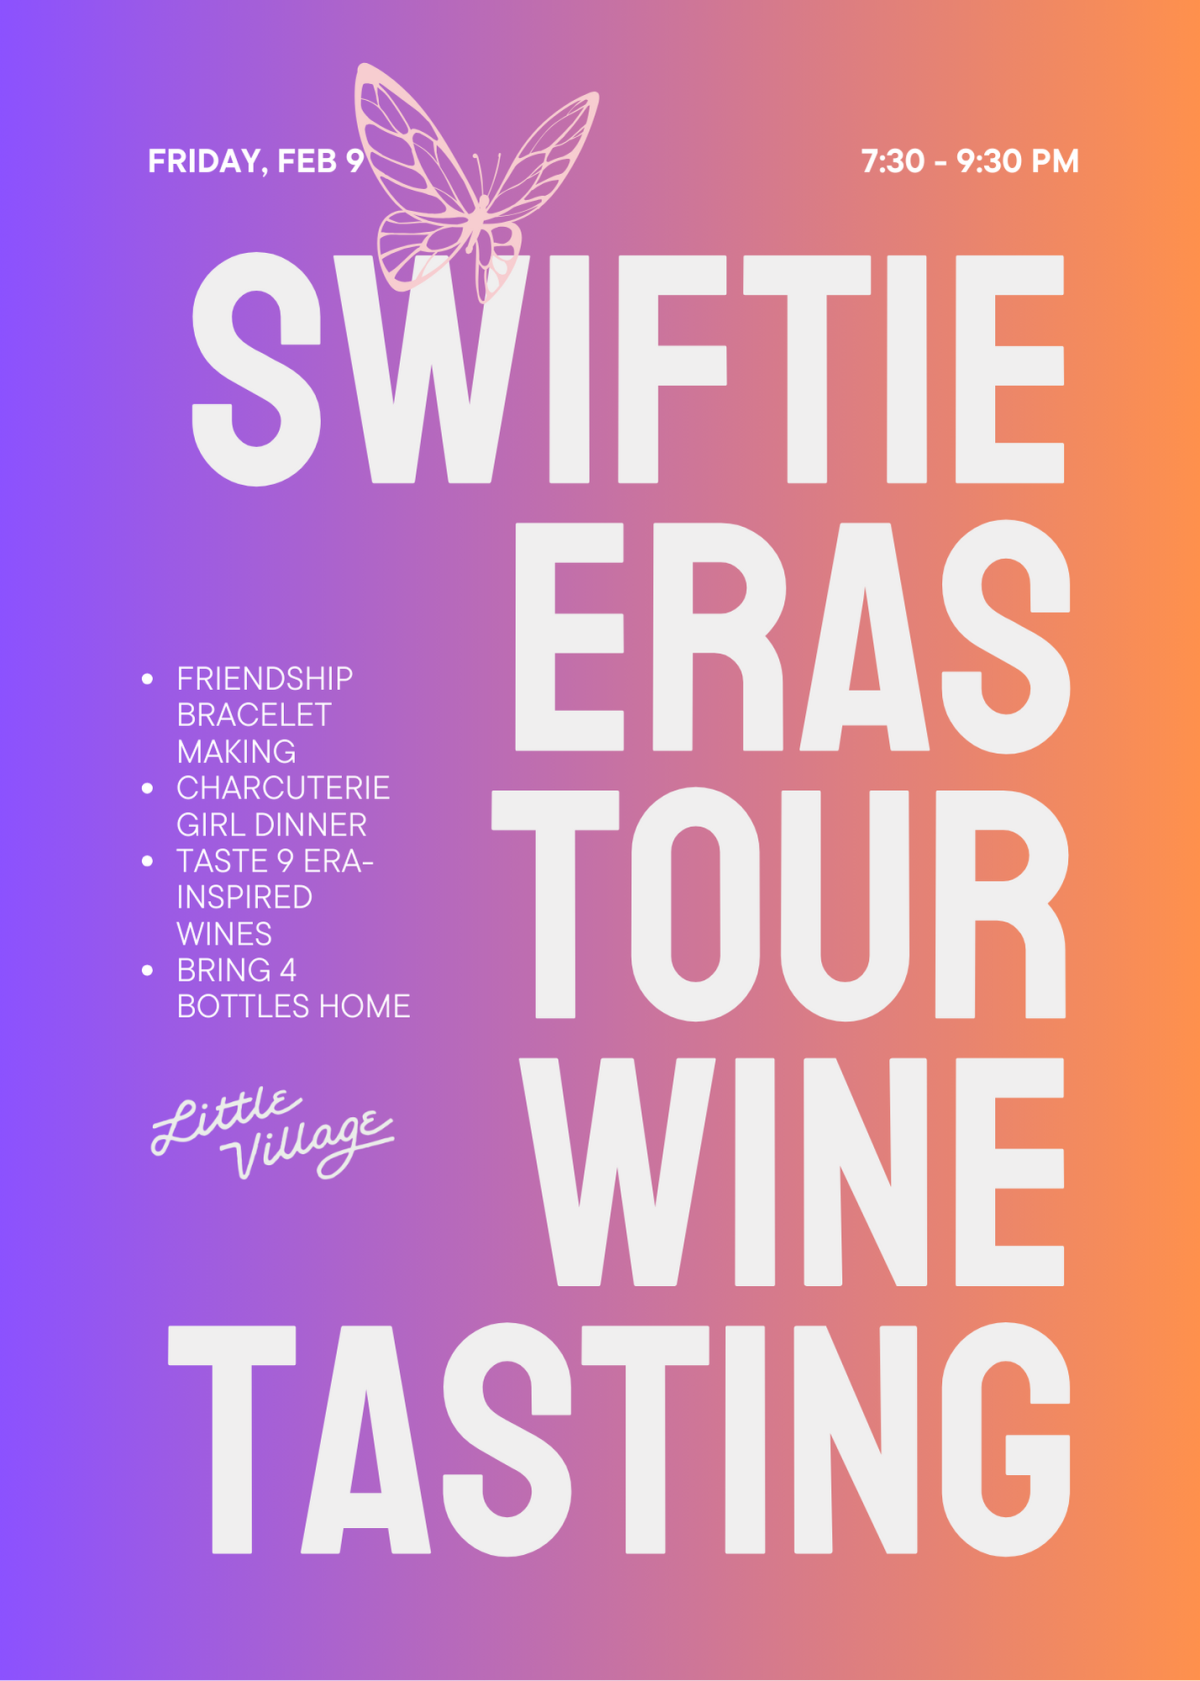 Swiftie Eras Tour Wine Tasting & Friendship Bracelet Making 🦋 Wauwatosa, WI